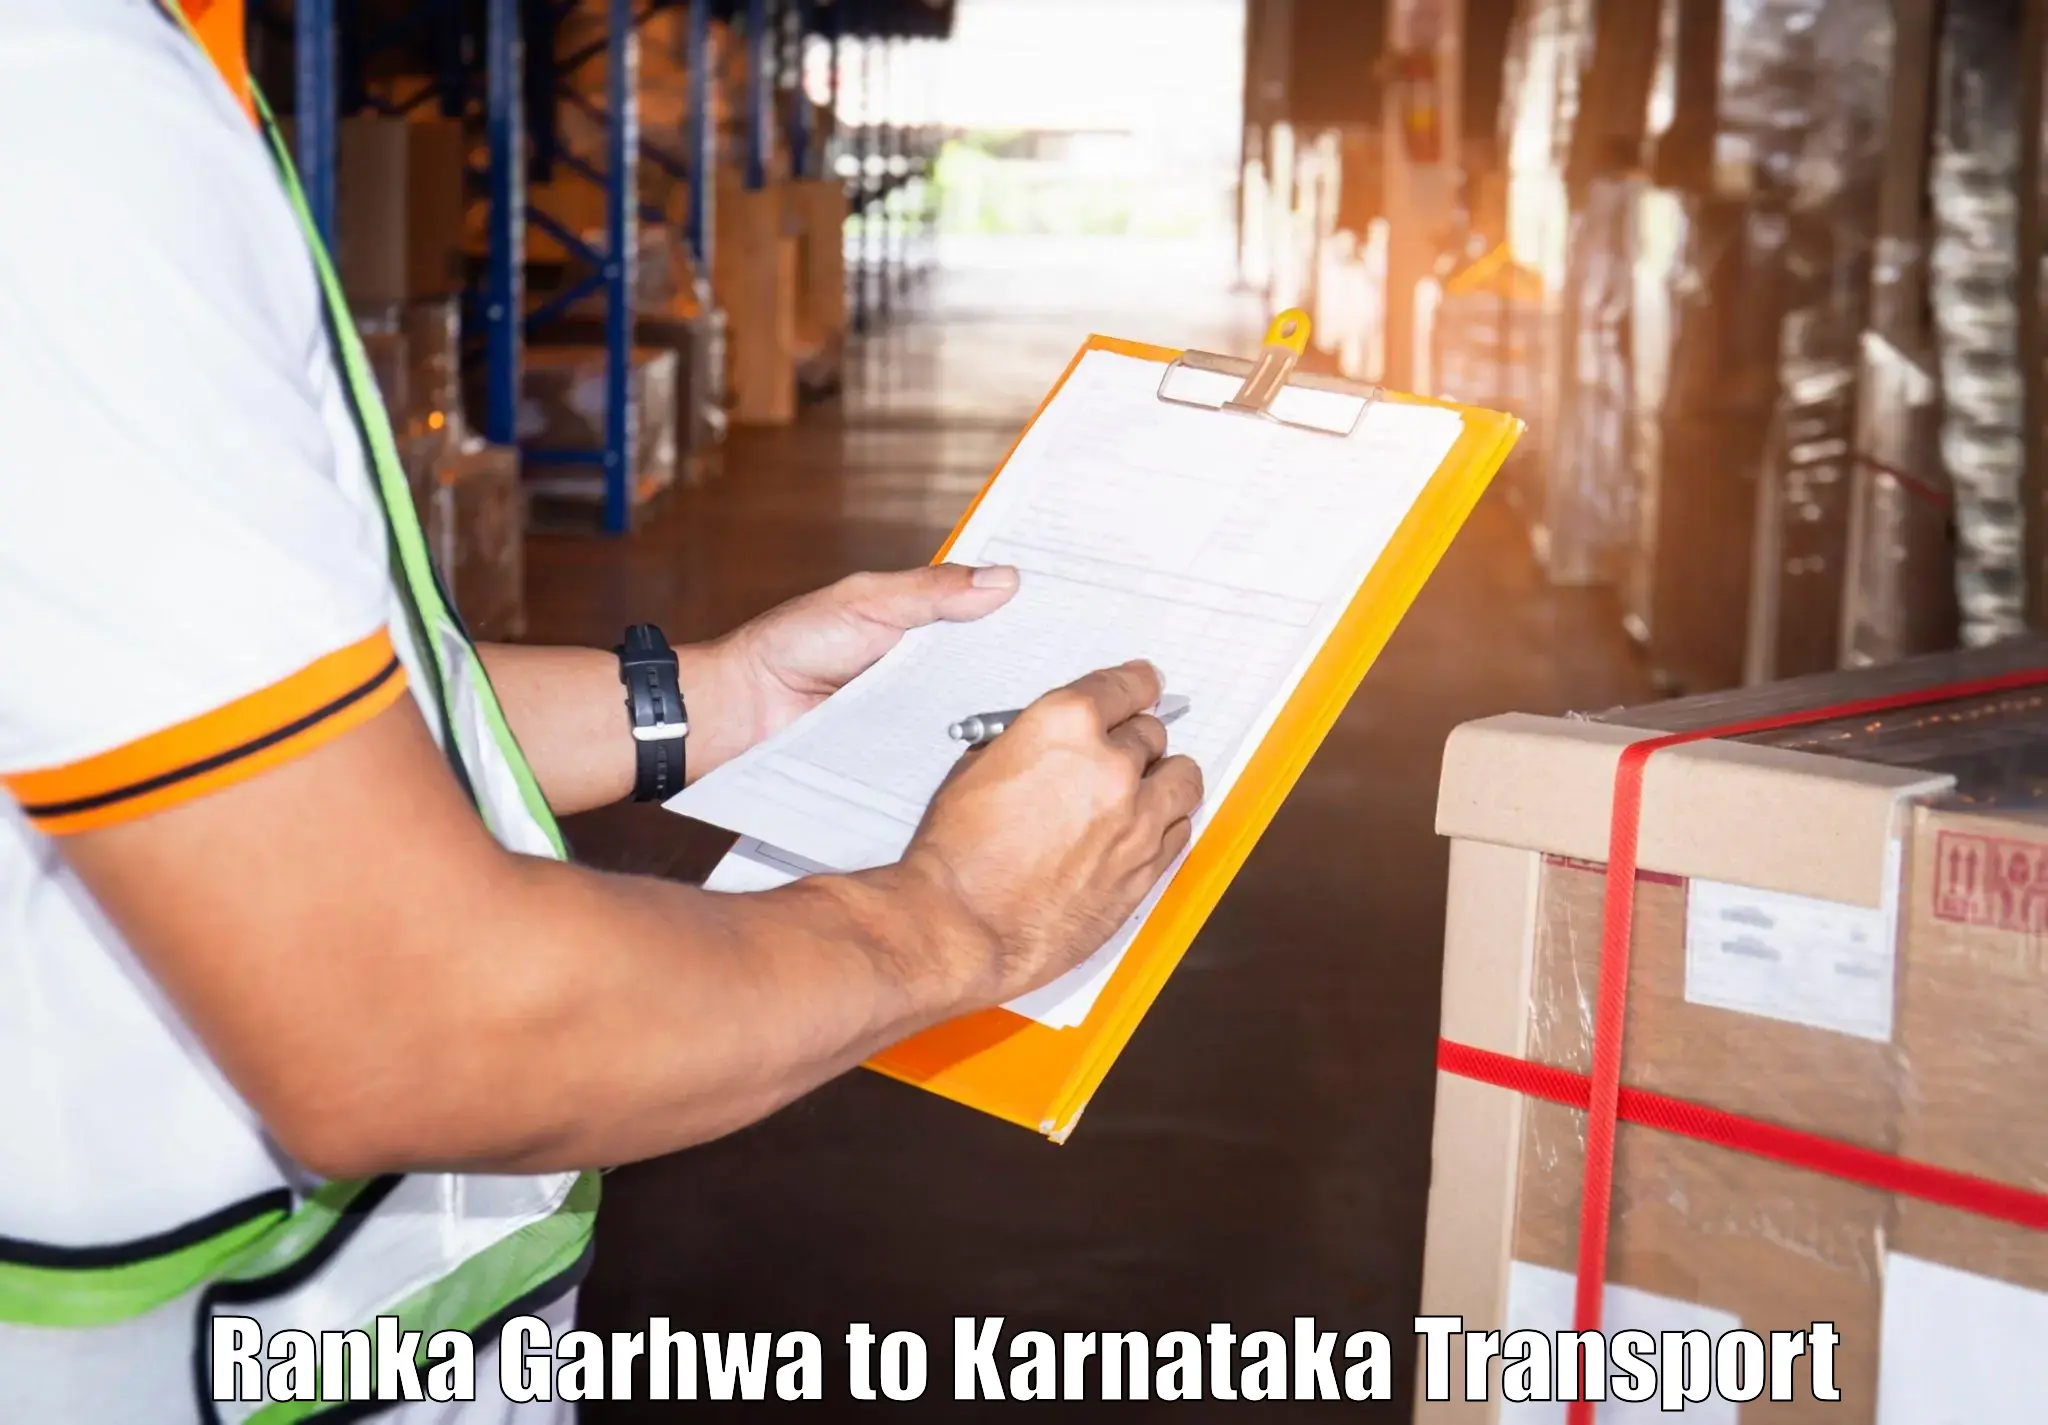 Delivery service Ranka Garhwa to Channapatna